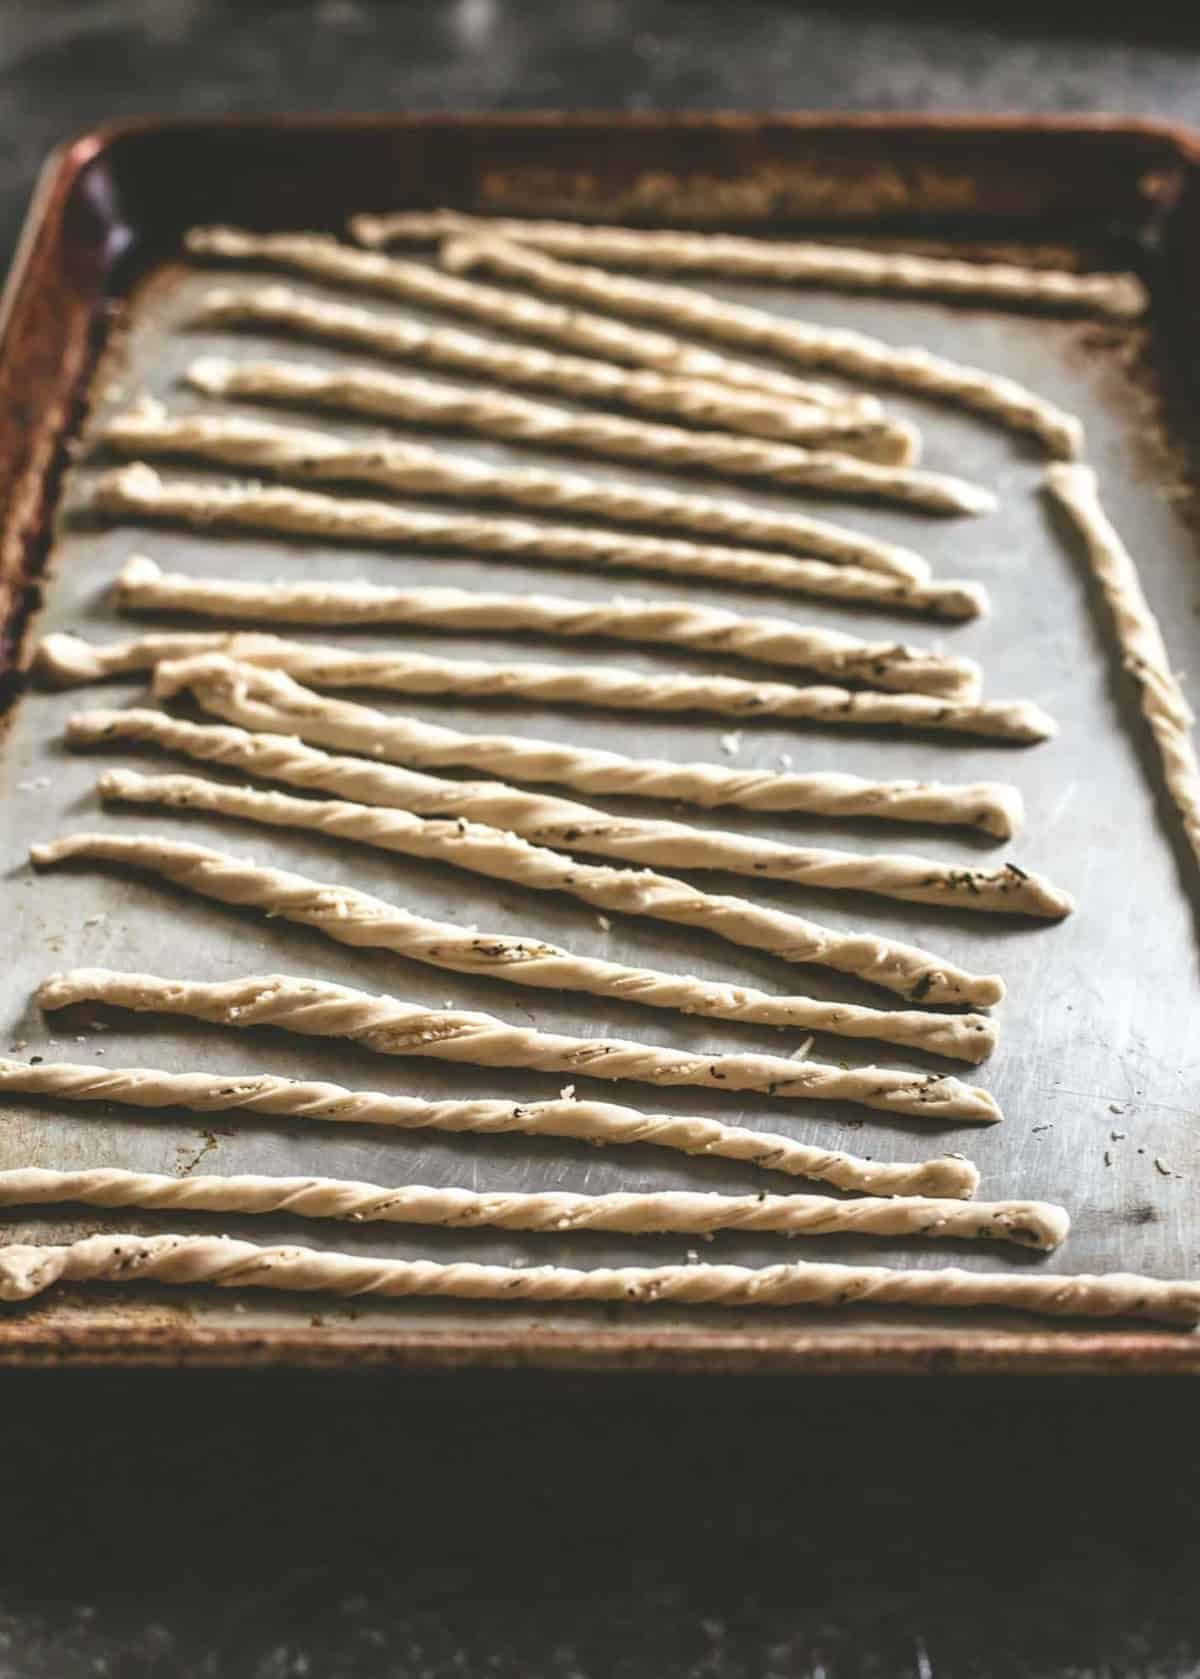 breadsticks on a sheet pan